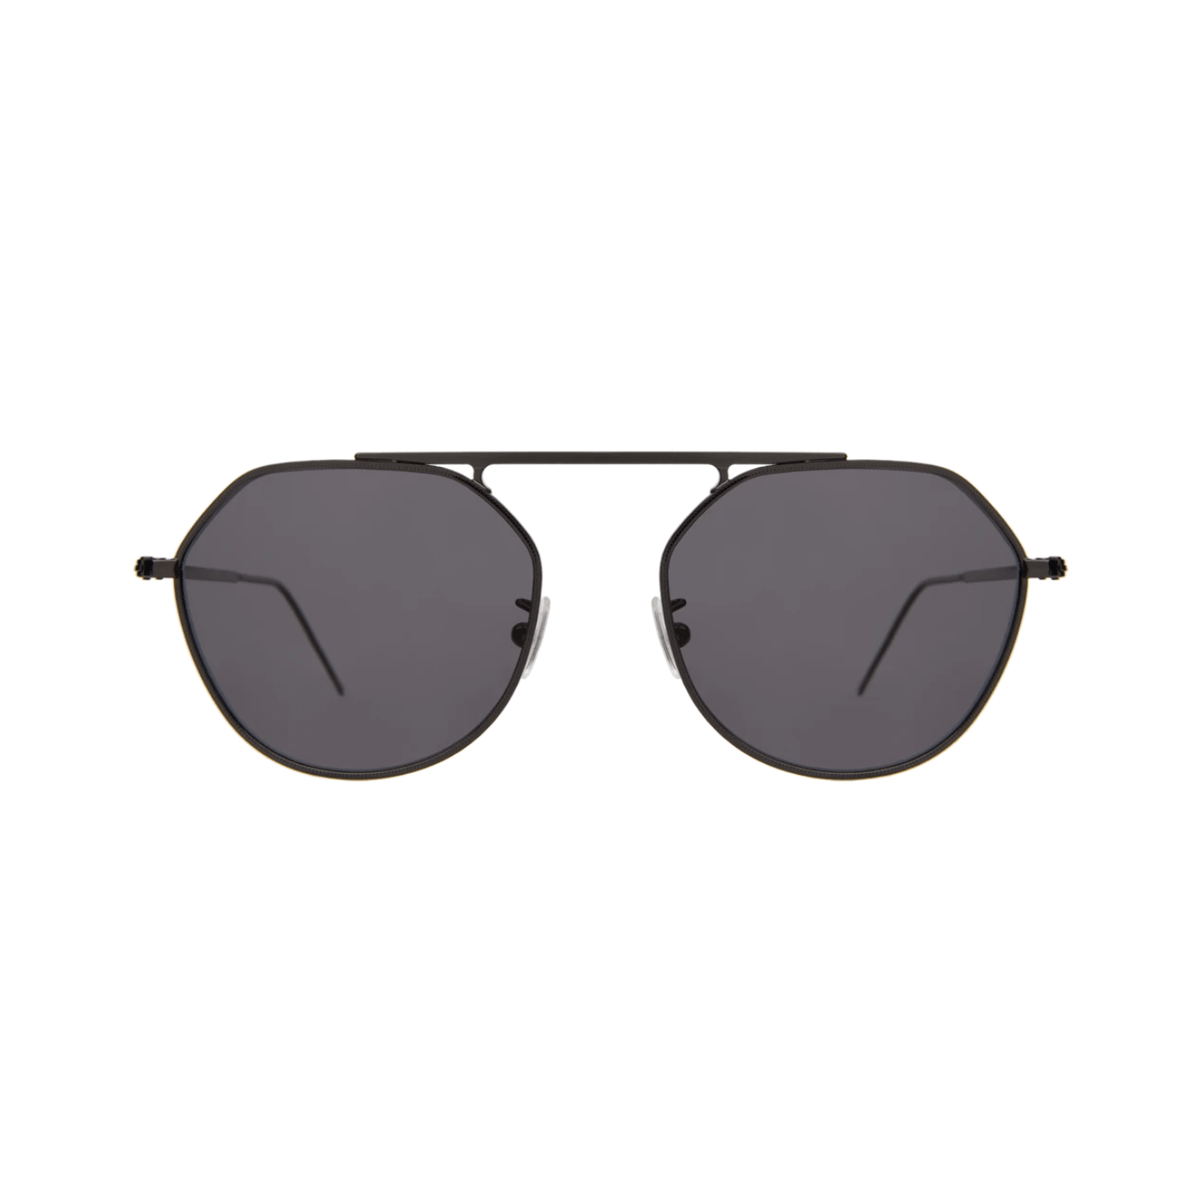 Nicosia Sunglasses by Illesteva 